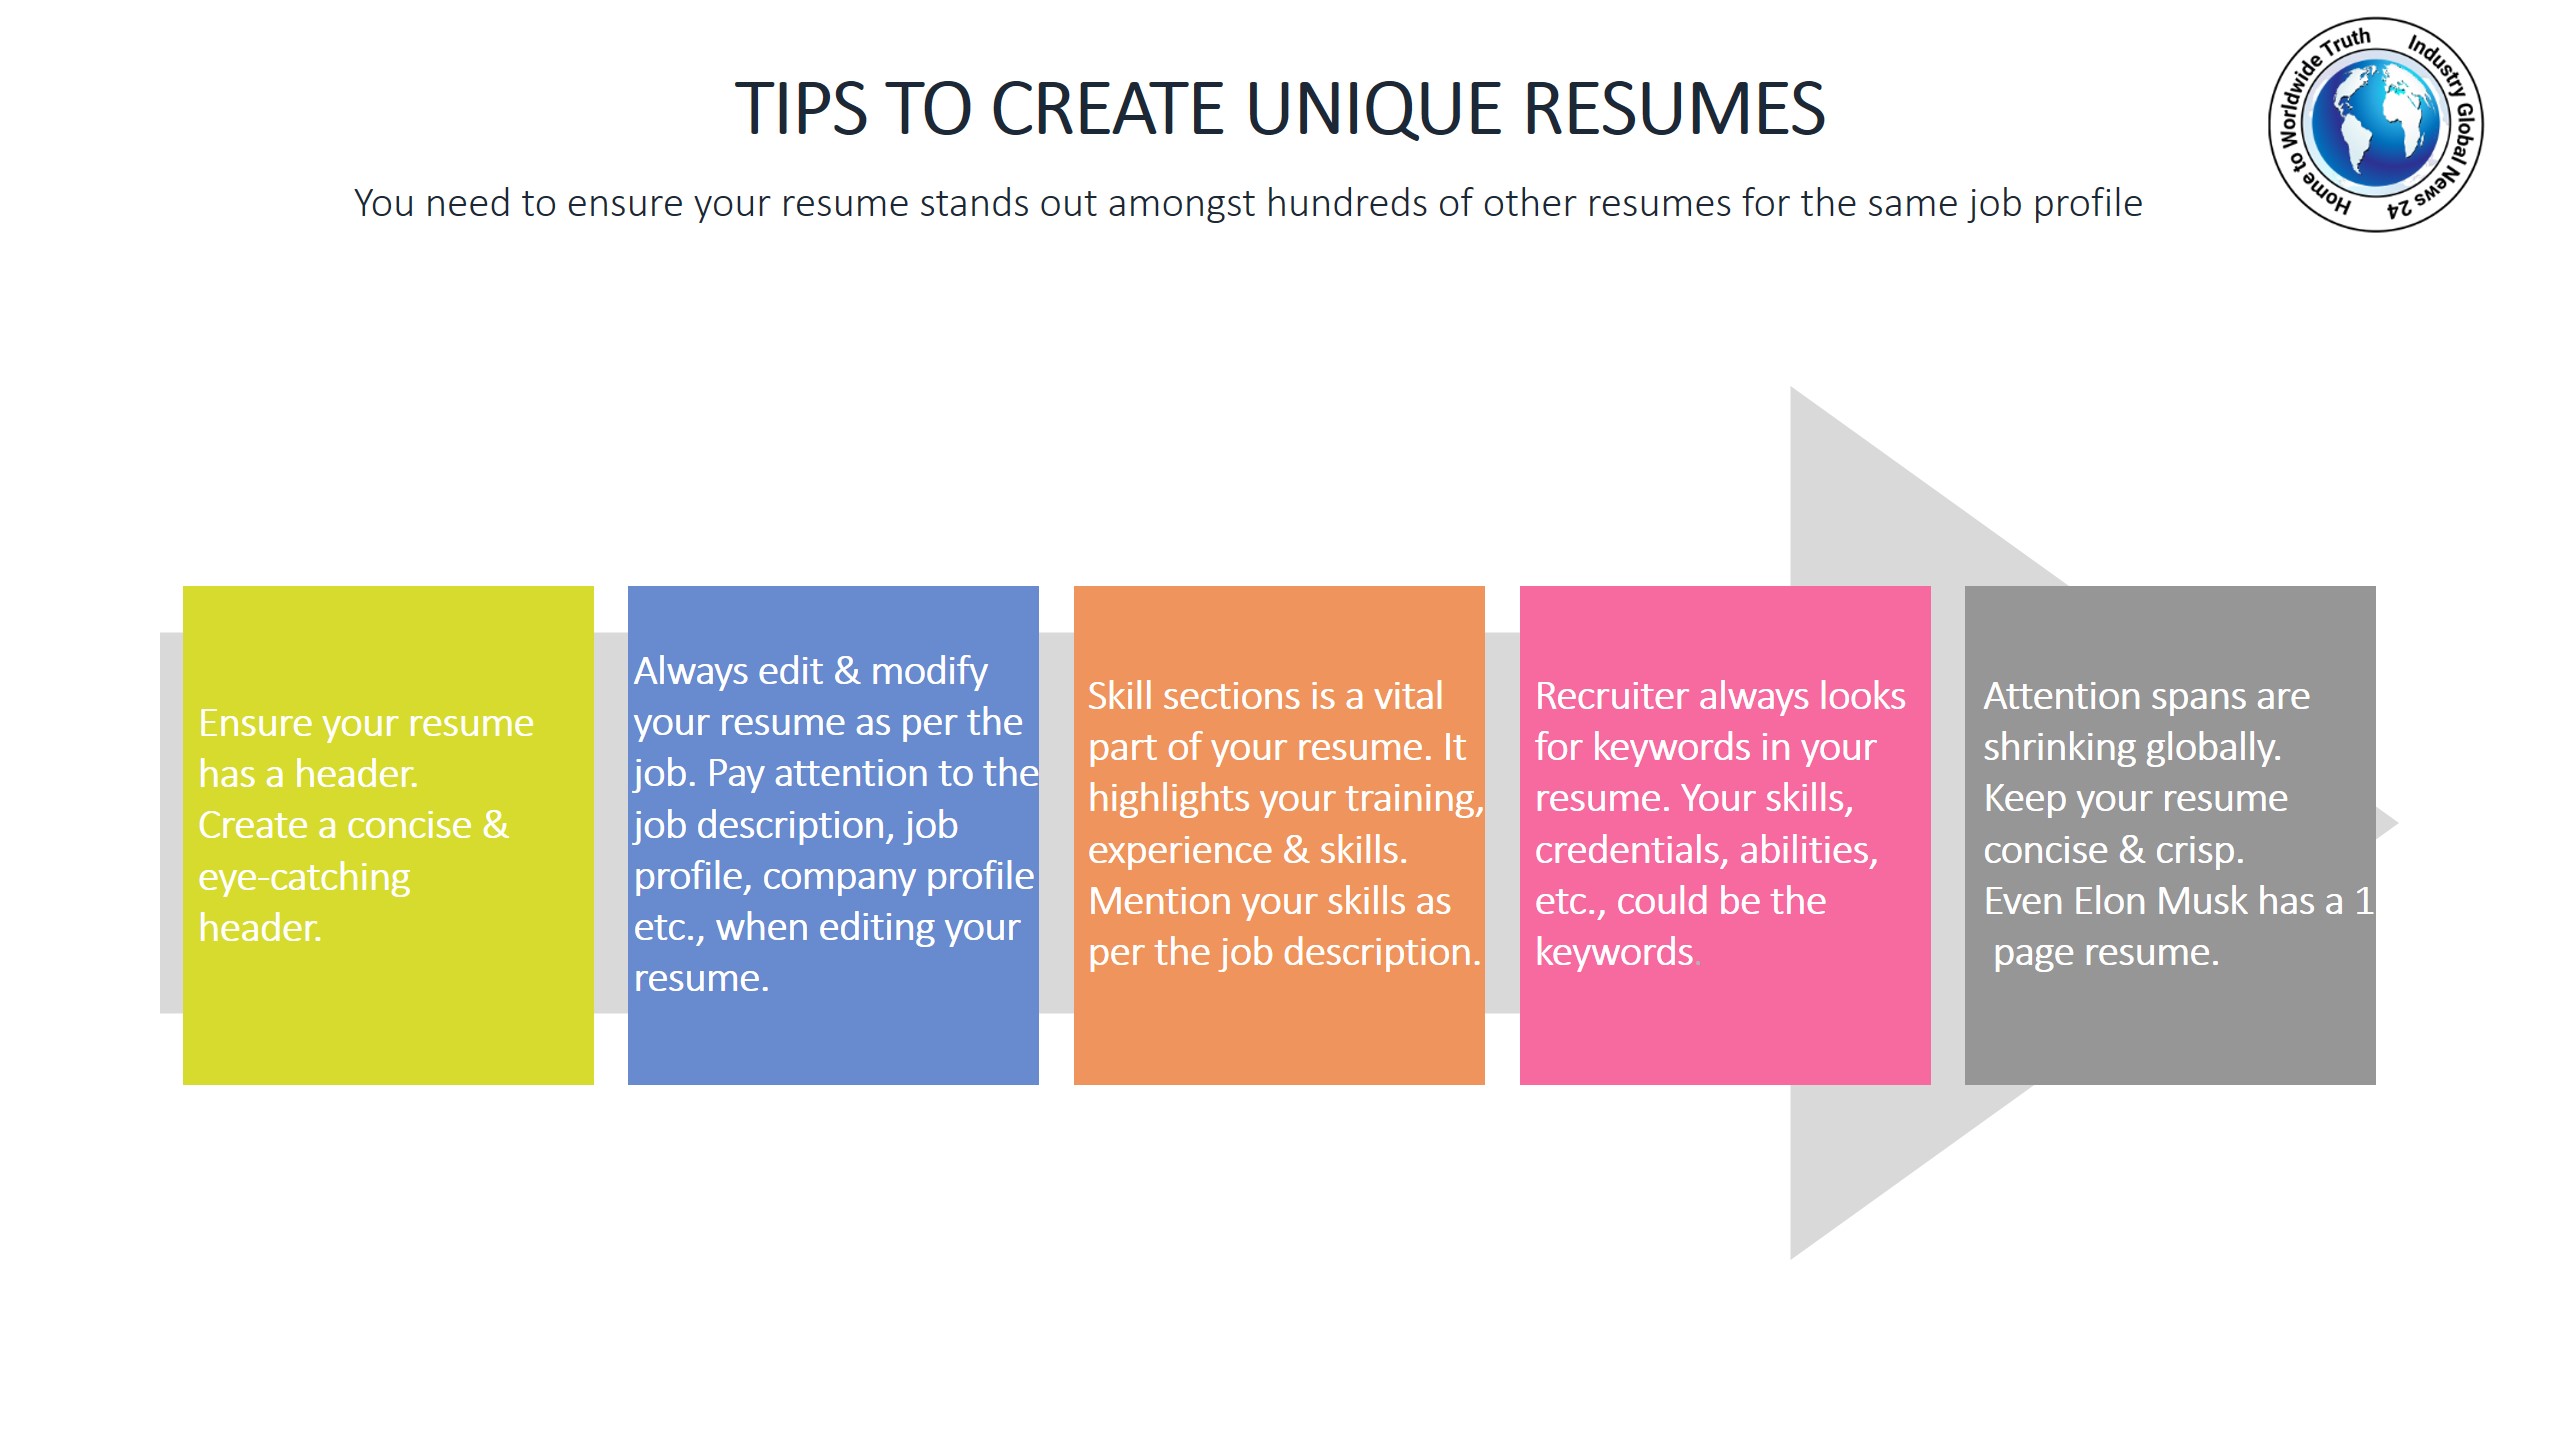 Tips to create unique resumes